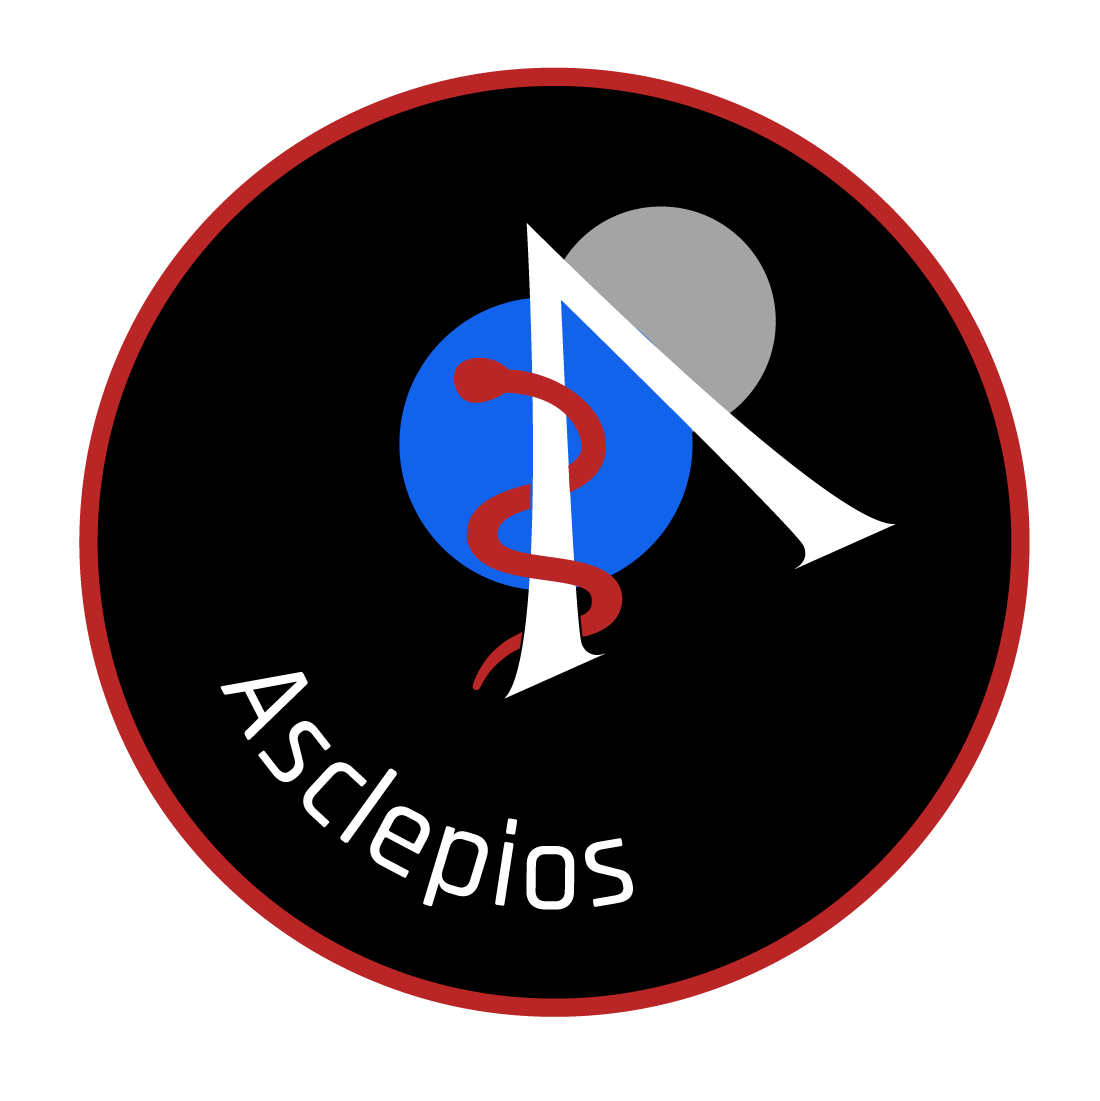 Asclépios_Logo_flat.png